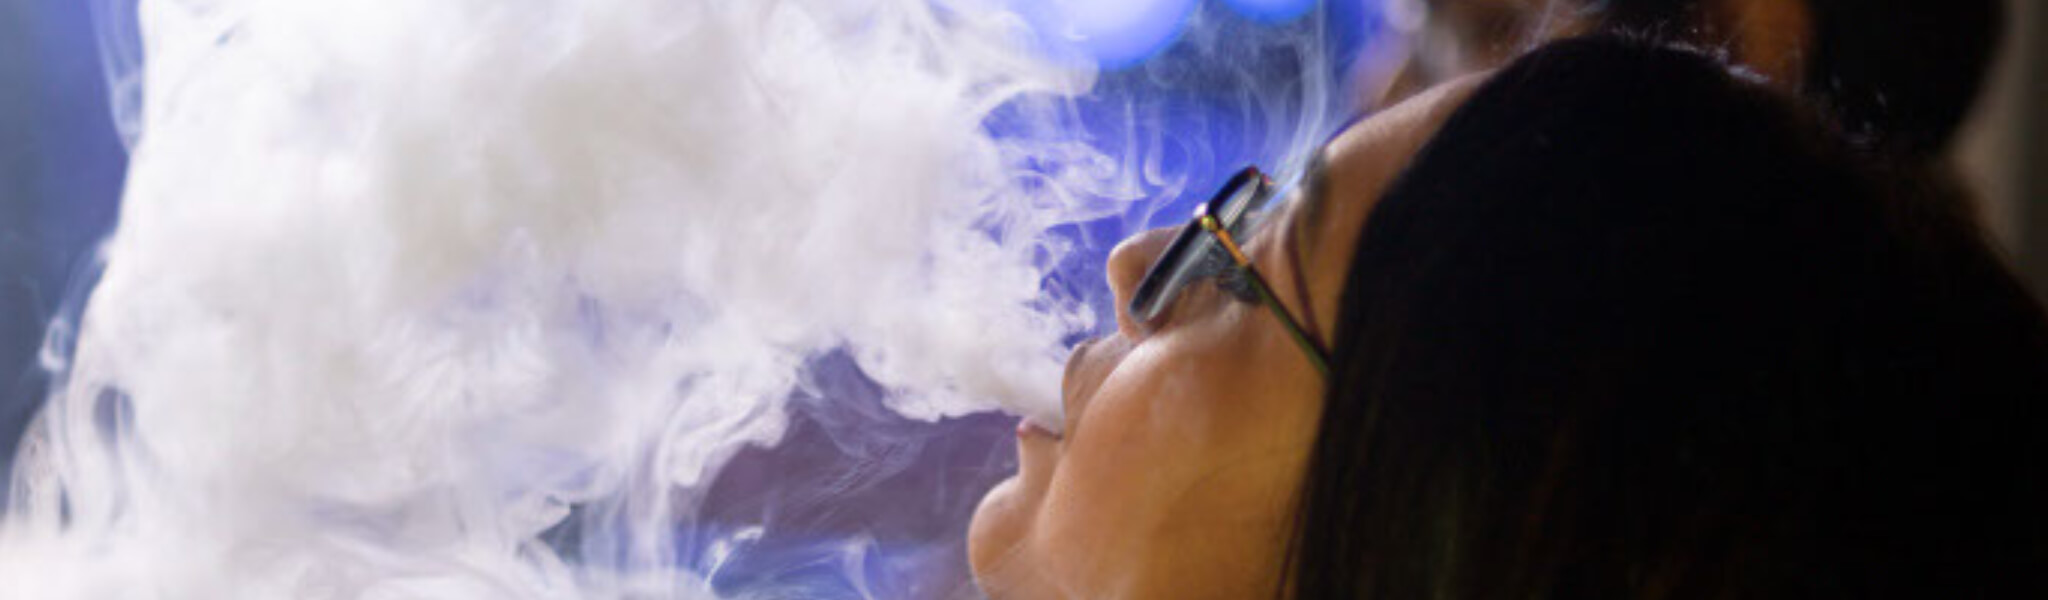 woman smokes weed vape pen